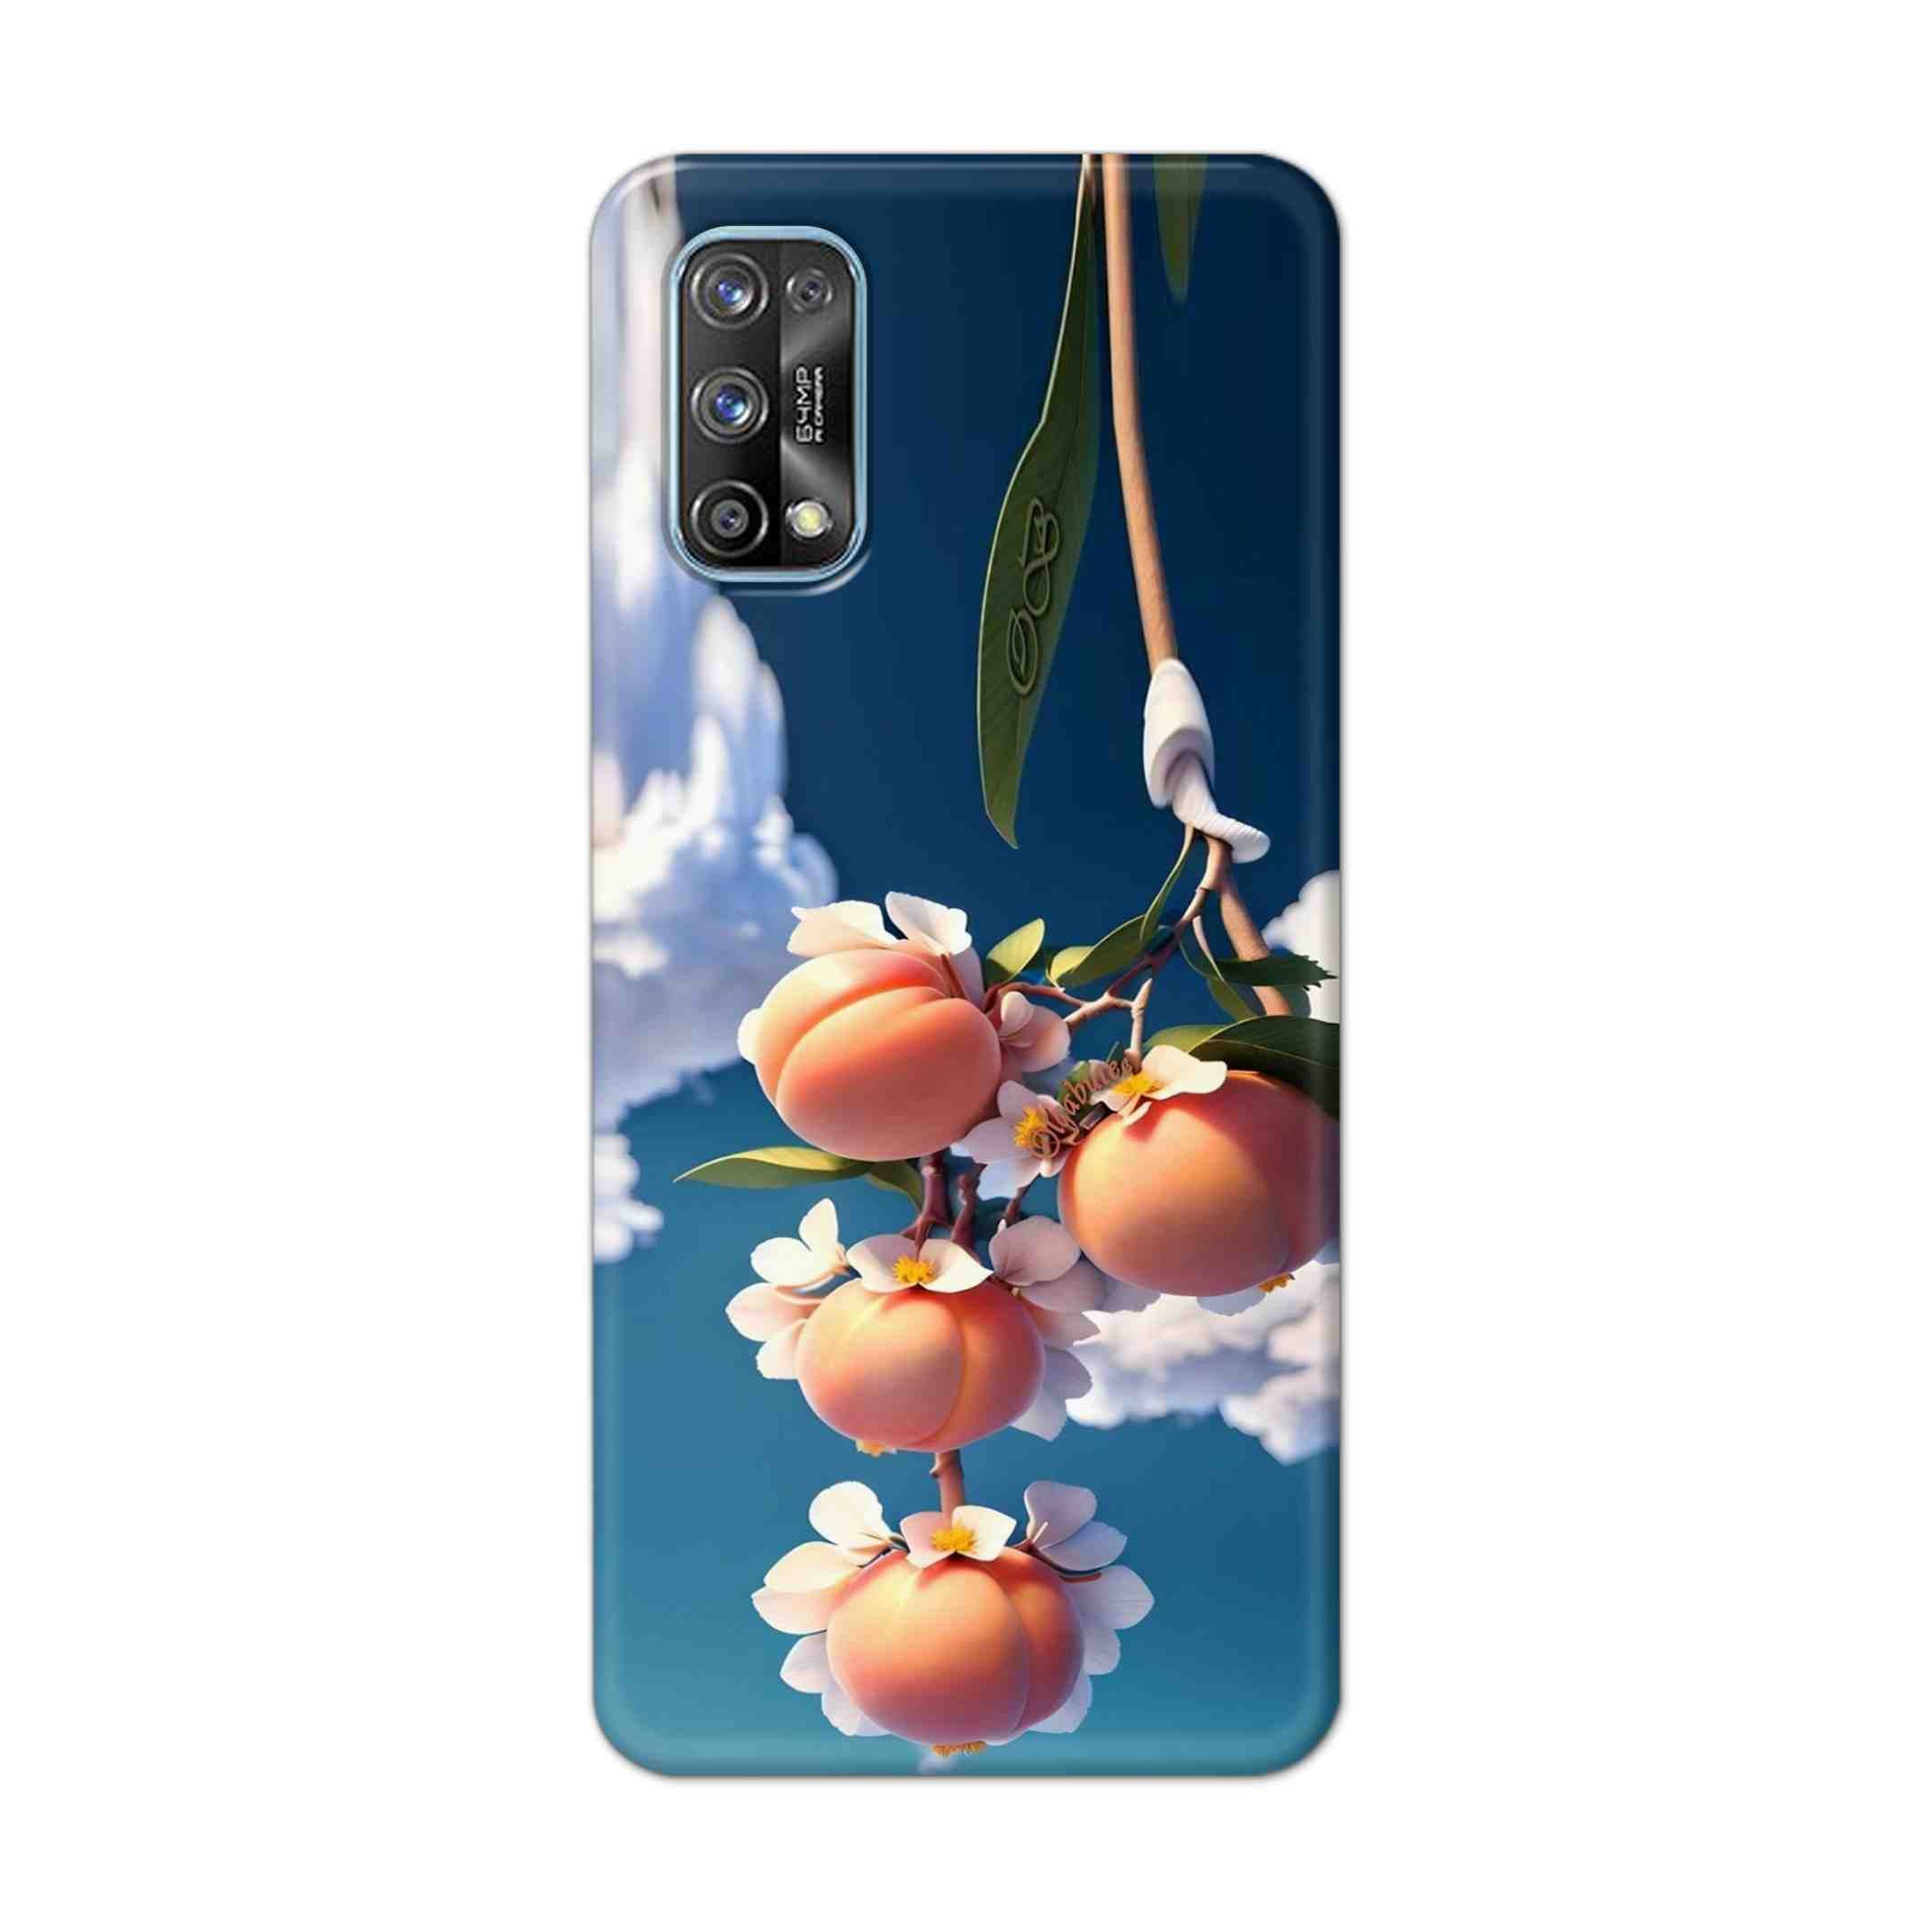 Buy Fruit Hard Back Mobile Phone Case Cover For Realme 7 Pro Online